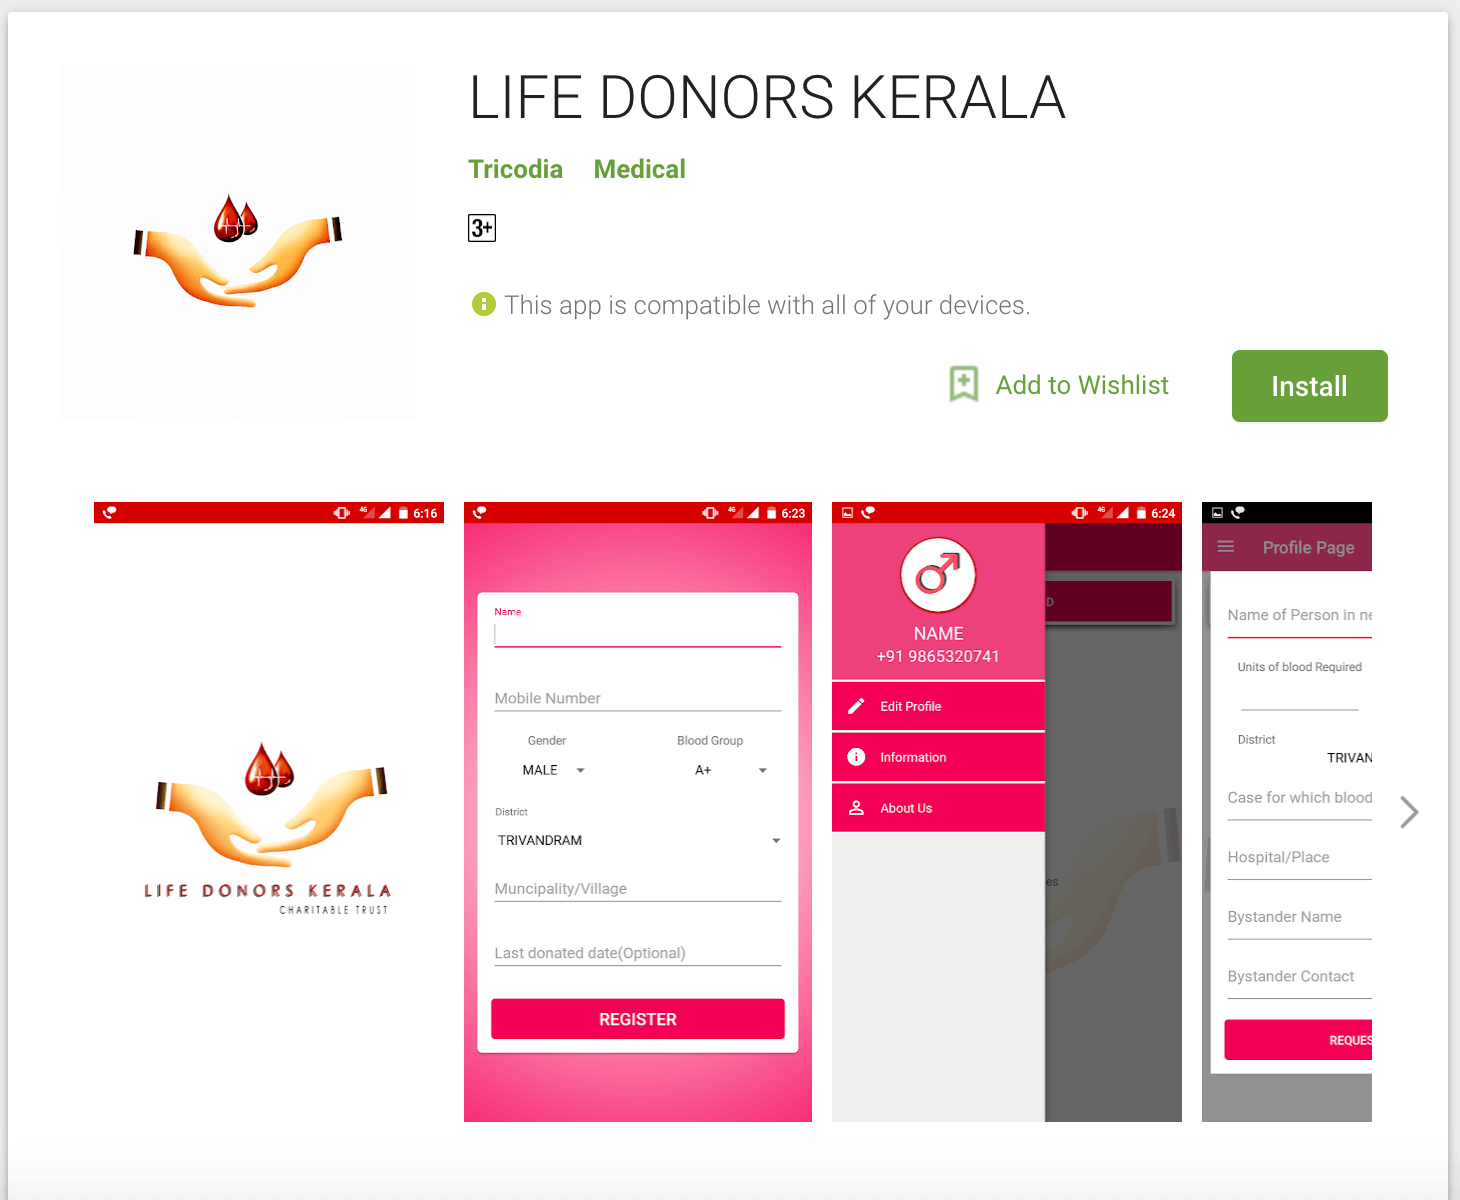 Life Donors Kerala Tricodia